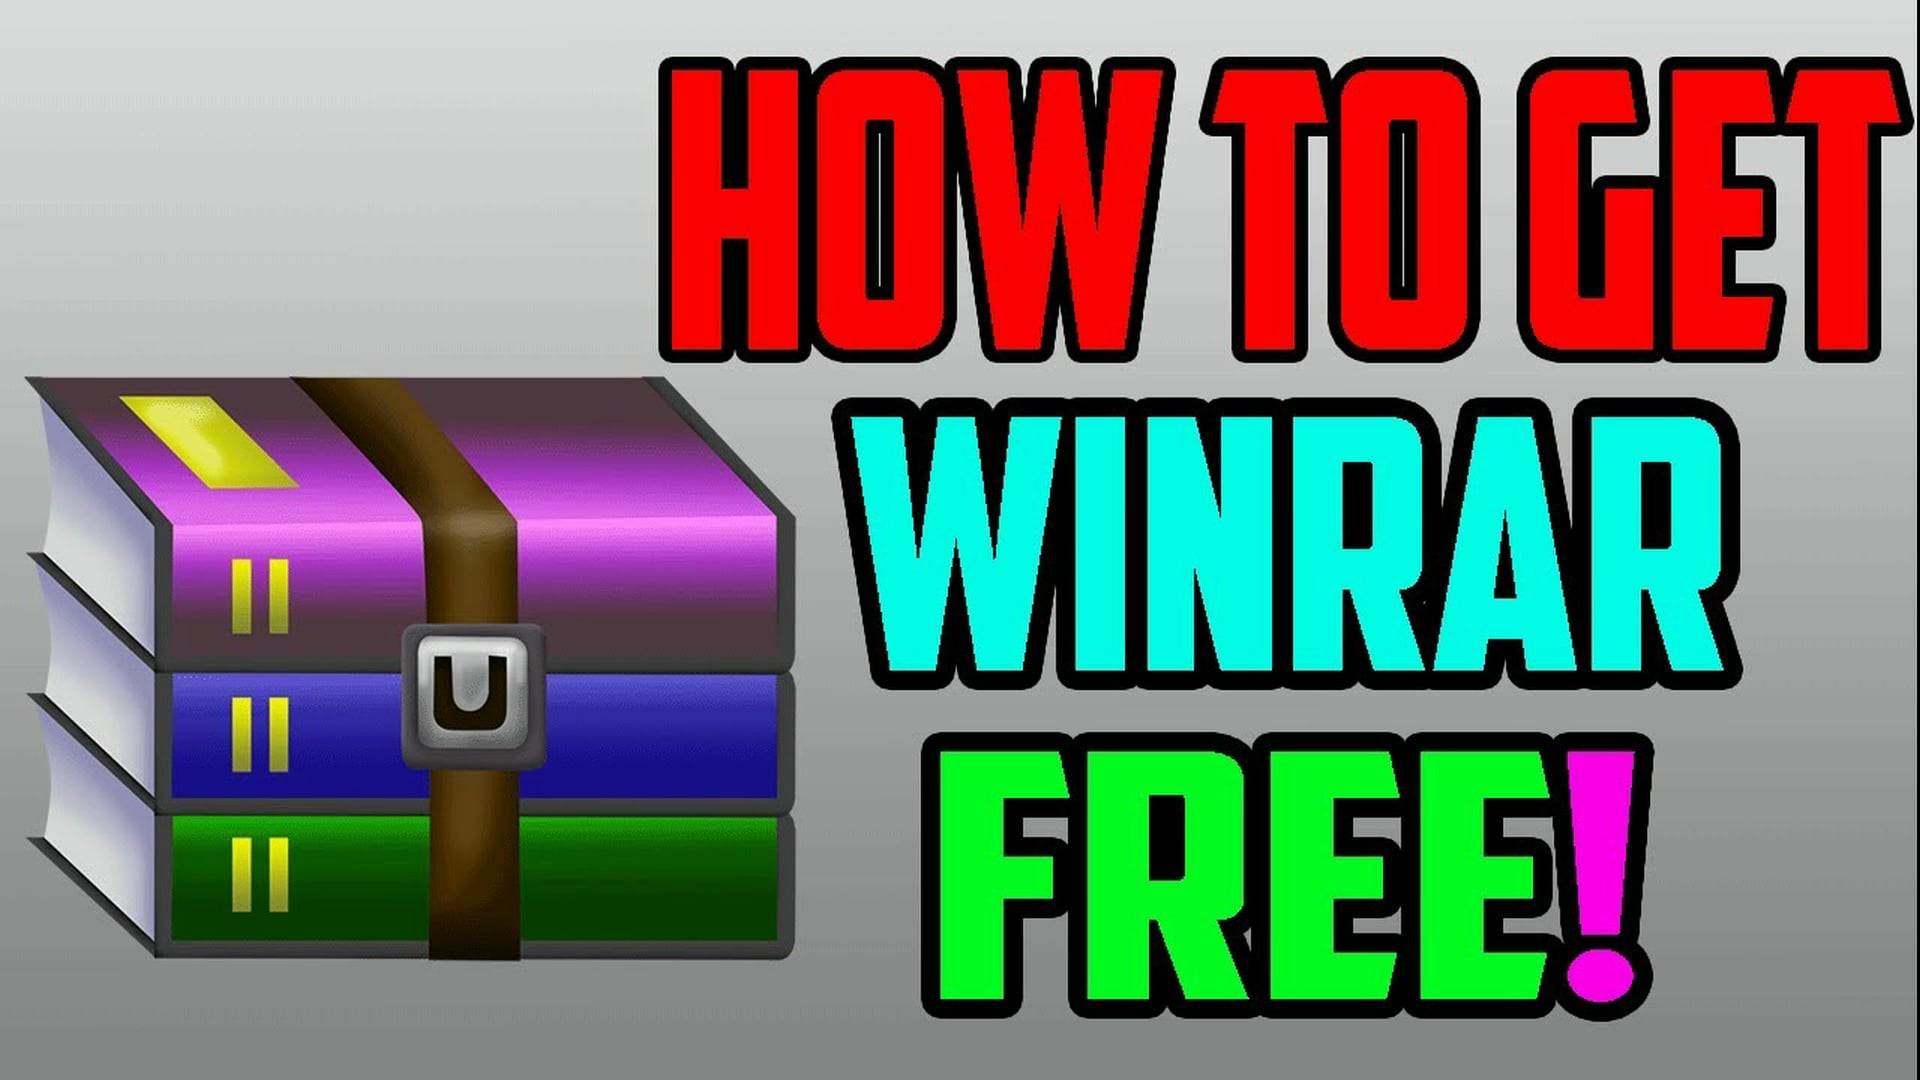 WINRAR Mac. WINRAR. Тема Старая WINRAR oldfag. How to Dowland game from WINRAR. Fix rar